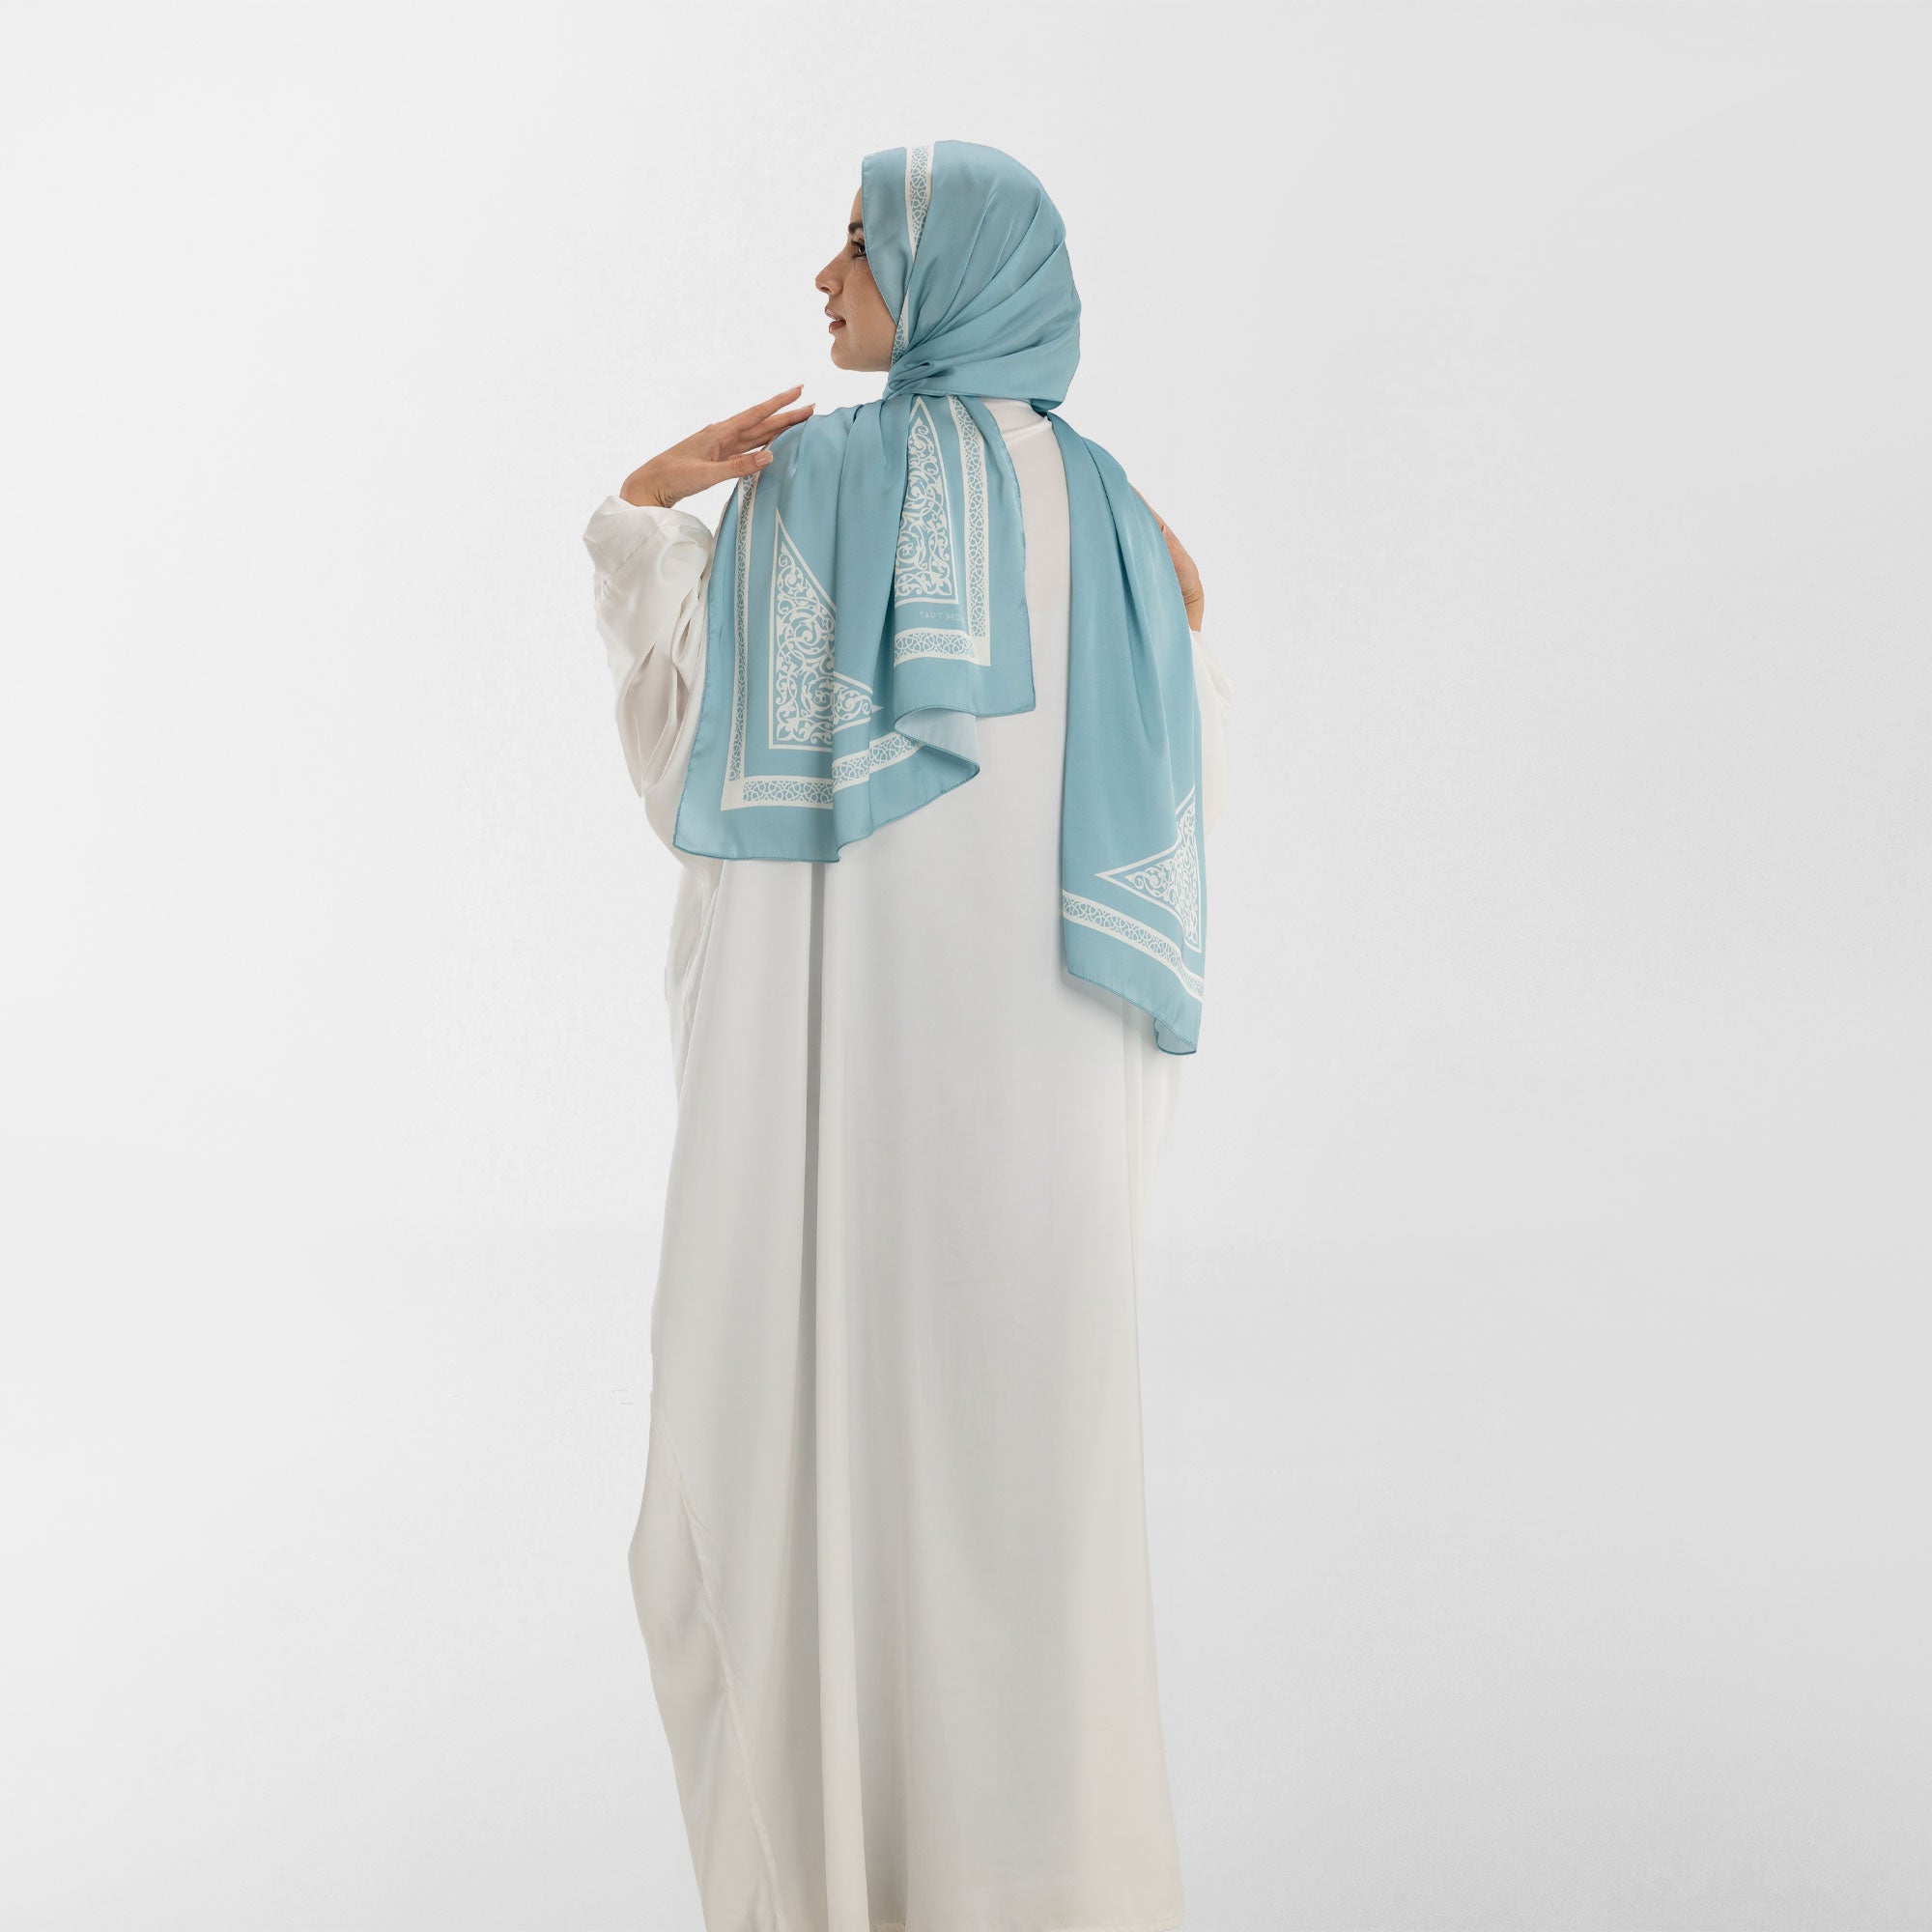 Prayer Wear - Isdal AL-QUBBA BLUE